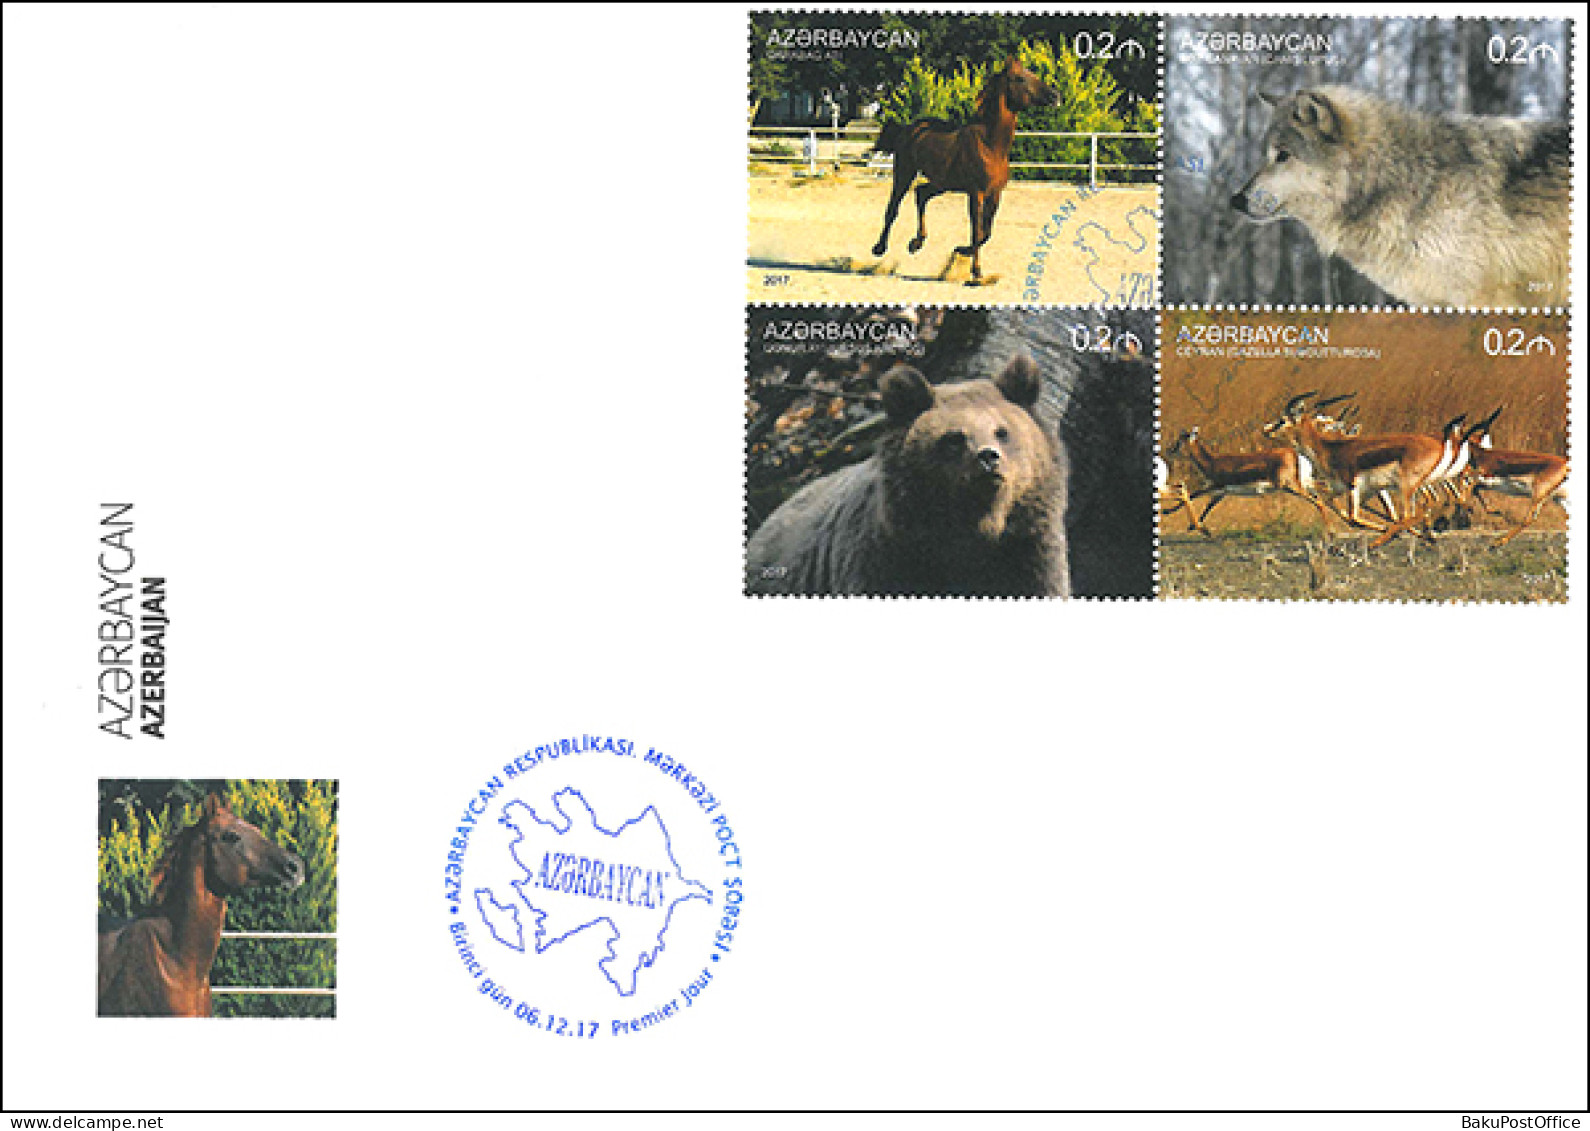 Azerbaijan 2017 FDC First Day Cover Book “Azerbaijan”. Fauna
1 Horse Bear Wolf Gazelle - Azerbaïjan